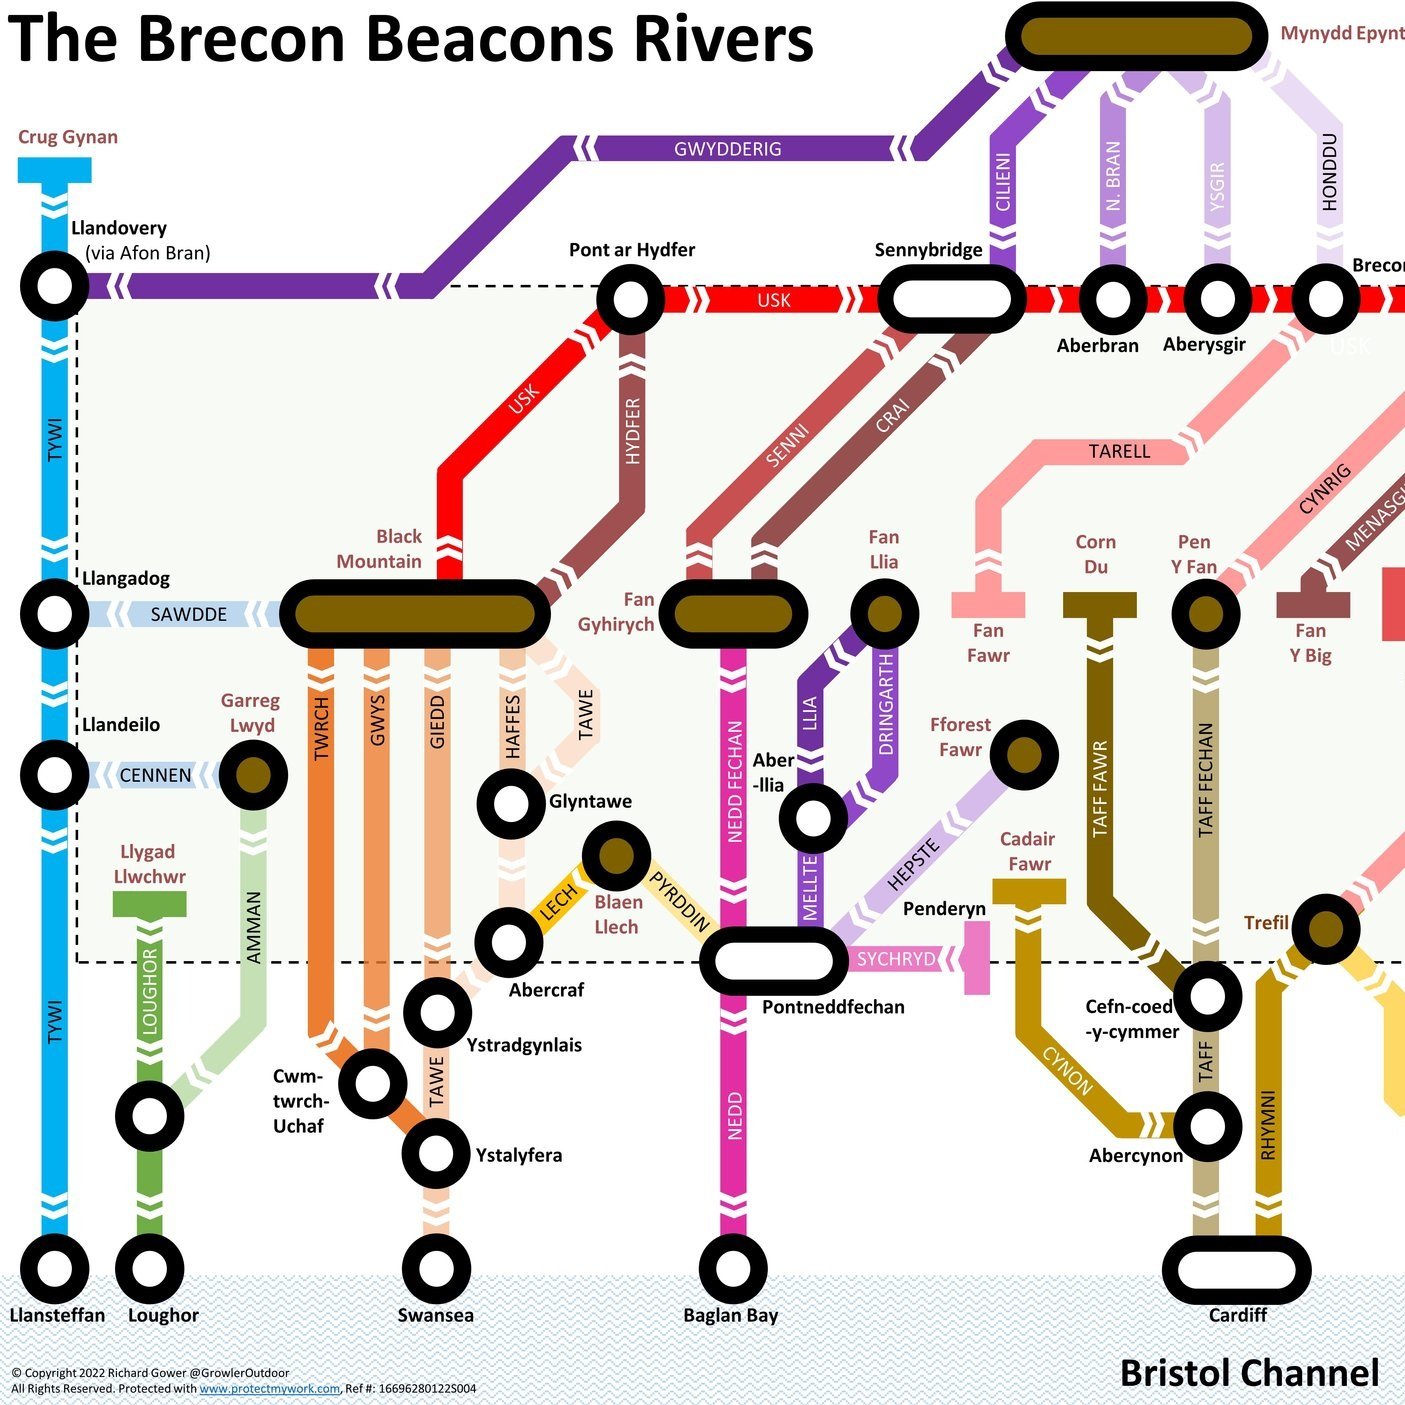 Brecon Beacons Rivers